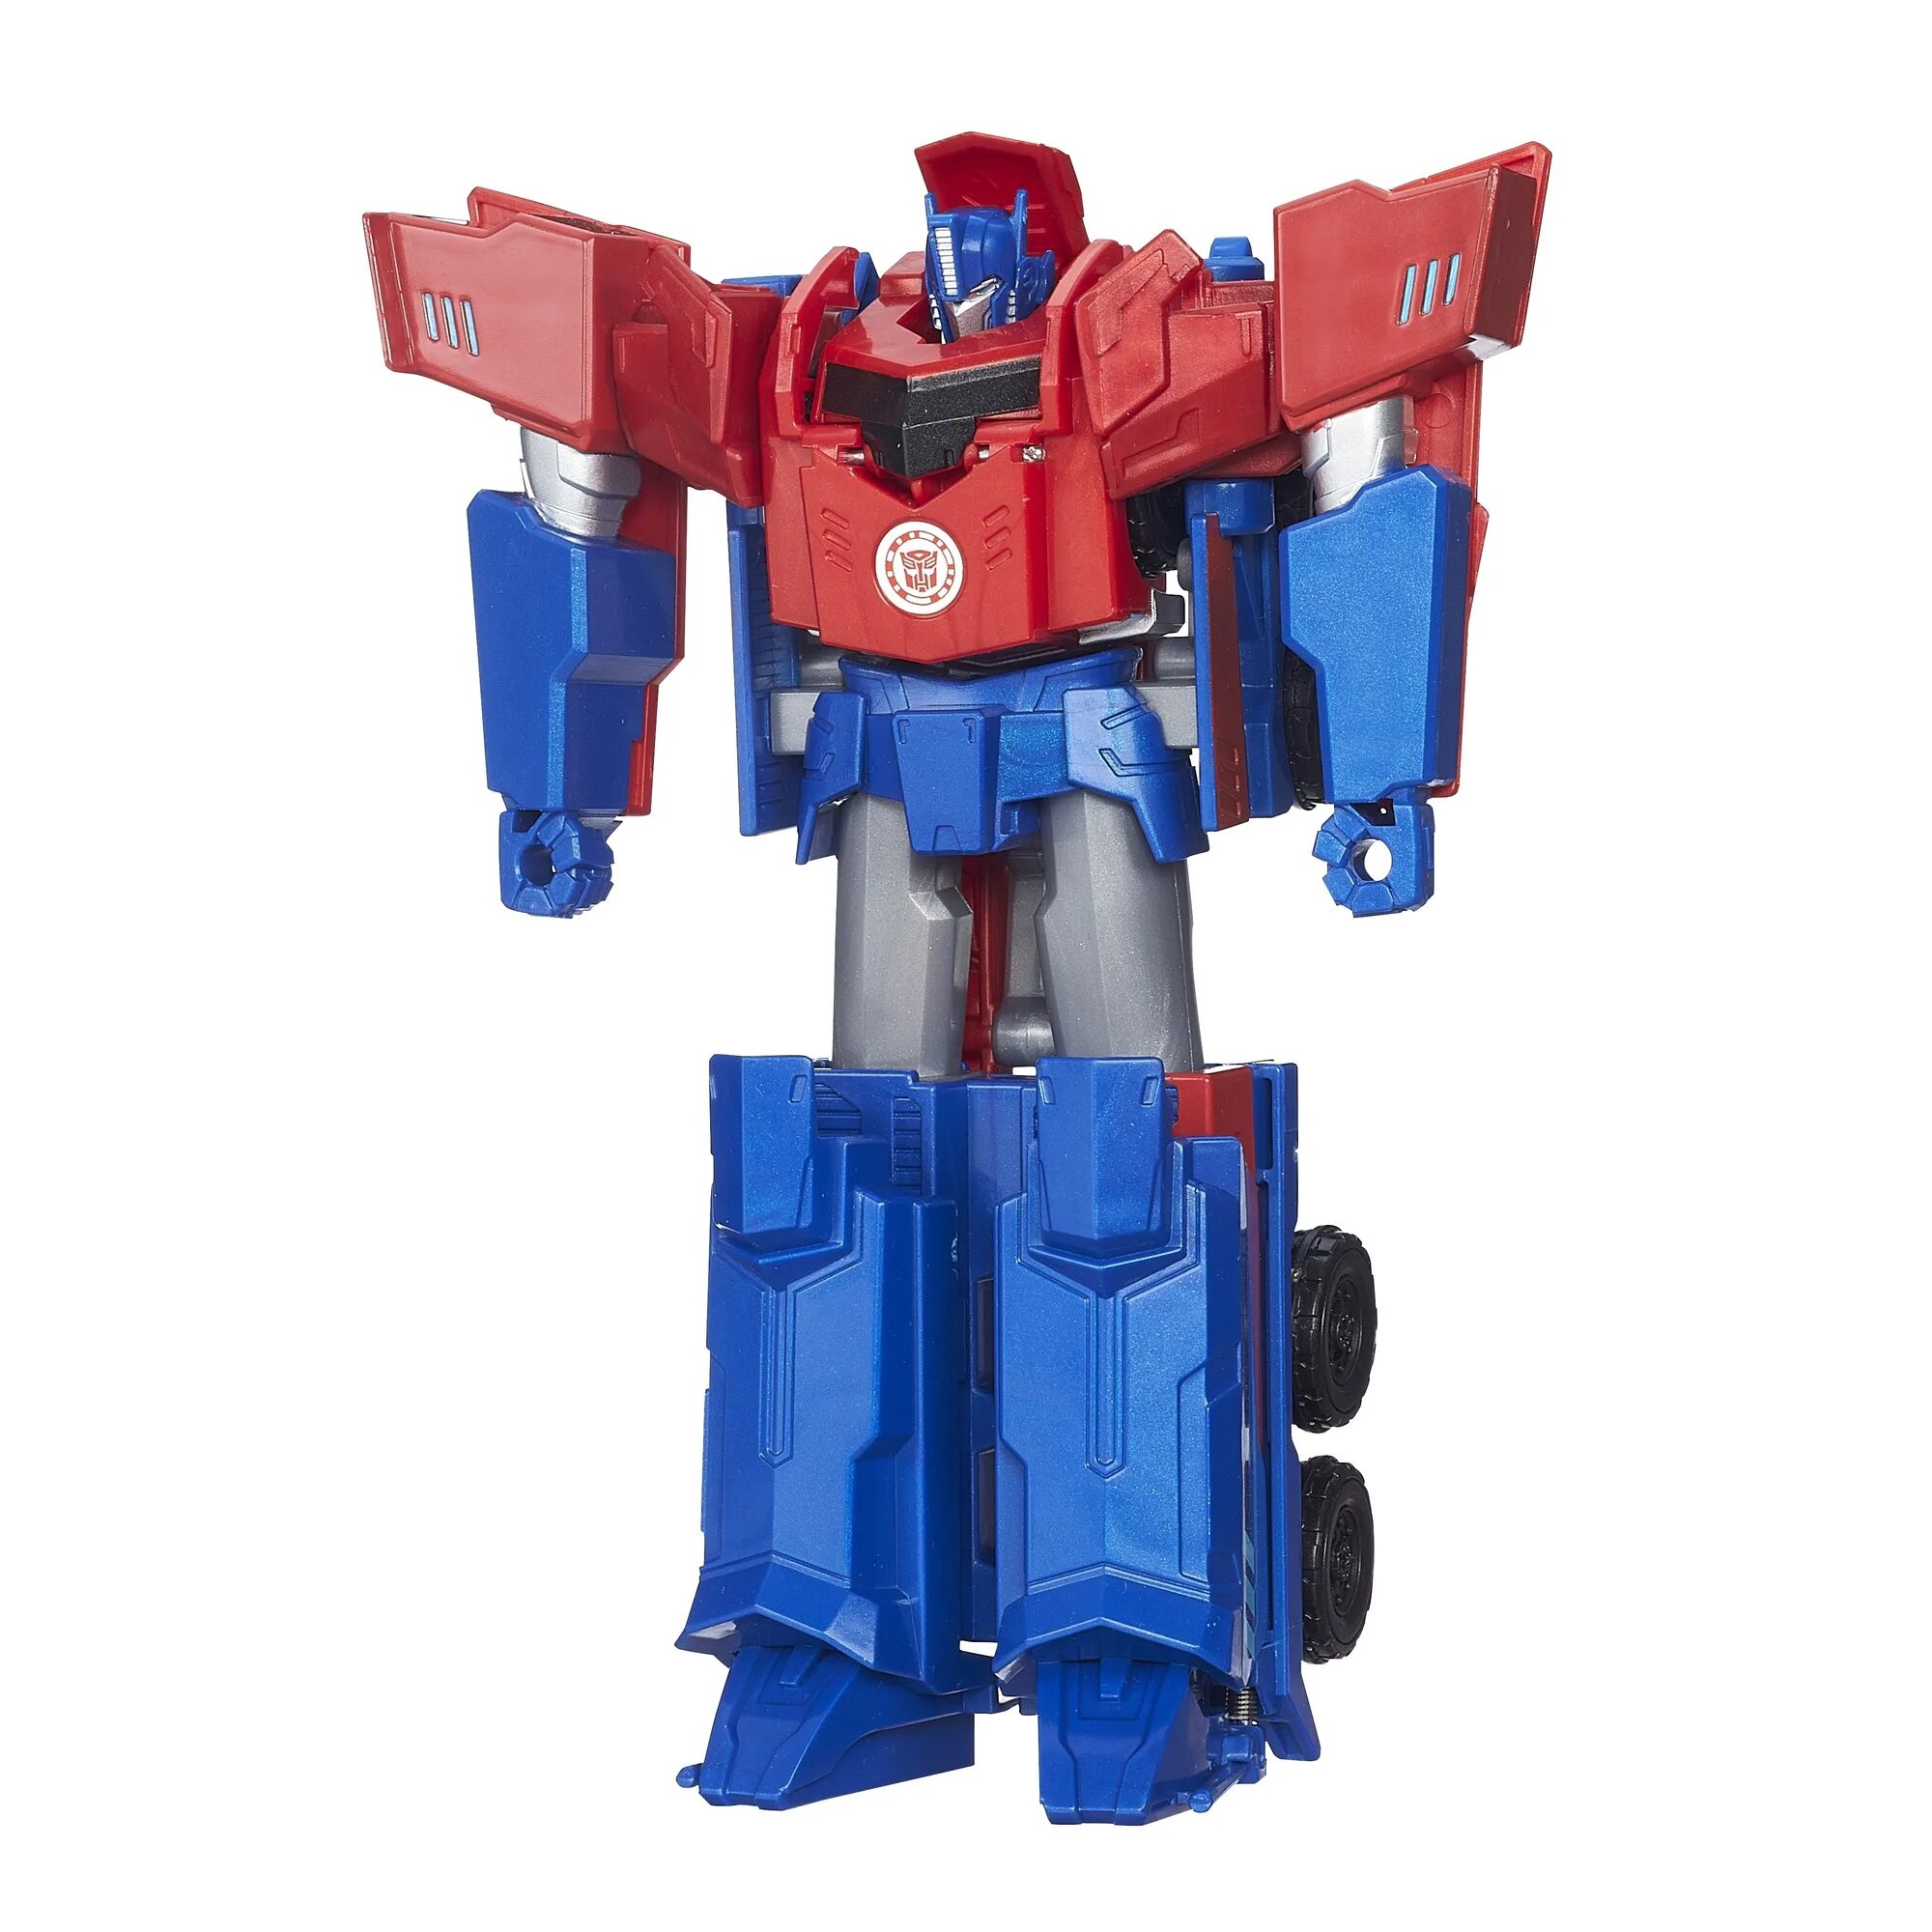 Оптимус прайм прикрытие. Робот Hasbro Transformers Оптимус Прайм. Трансформеры Прайм игрушки Оптимус Прайм. Трансформер Robots in Disguise 3-Step Changers - Optimus Prime. Hasbro Transformers b0067.